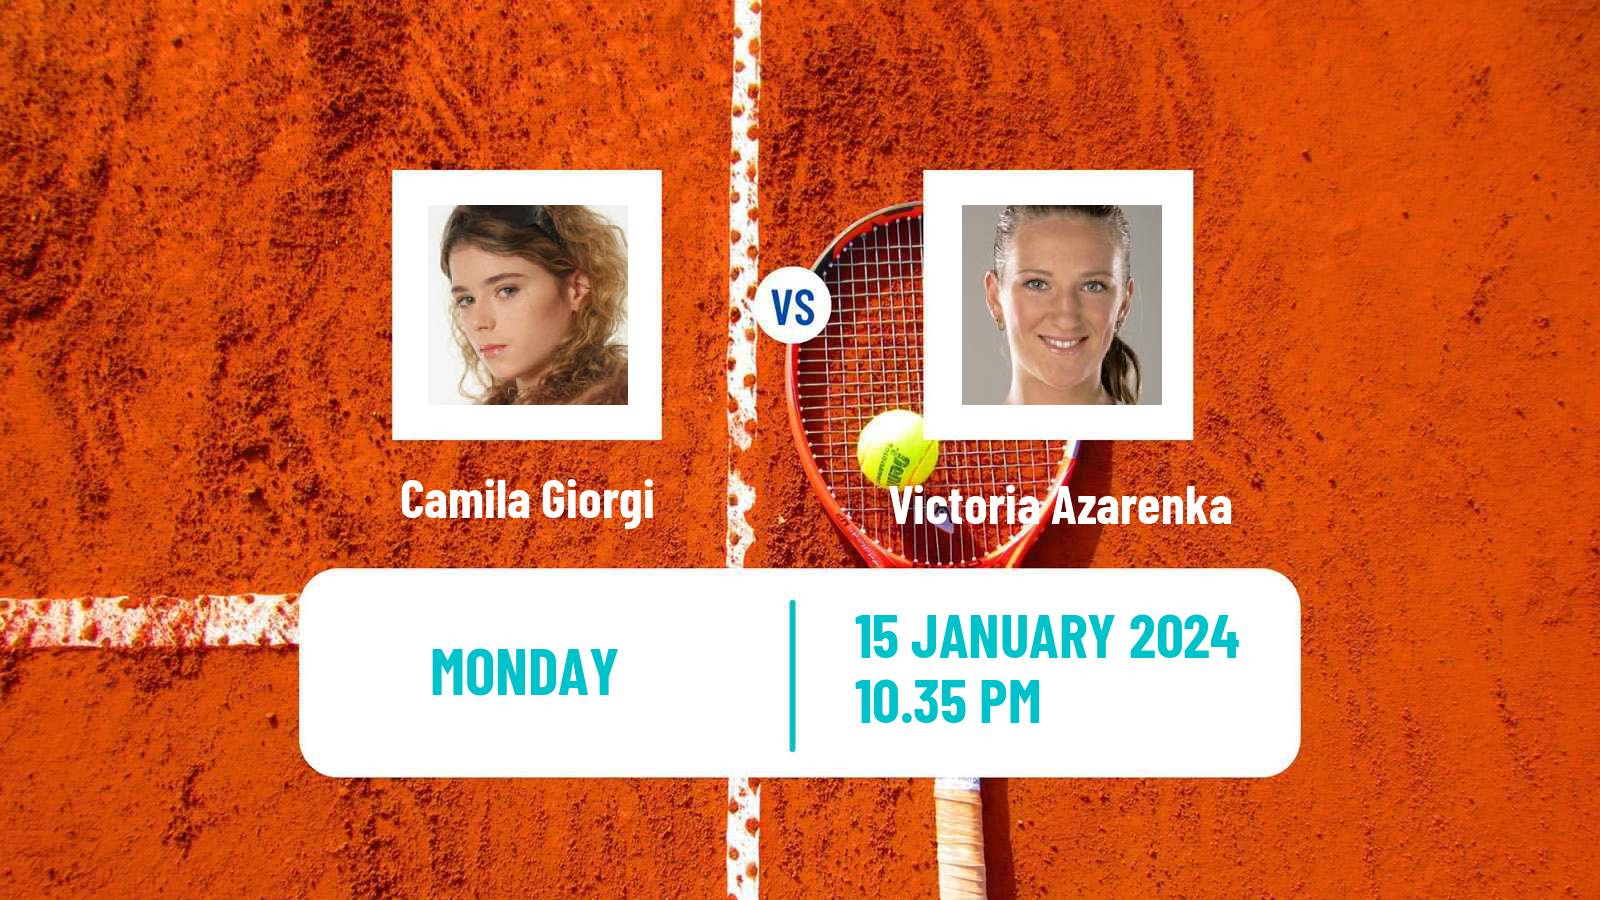 Tennis WTA Australian Open Camila Giorgi - Victoria Azarenka